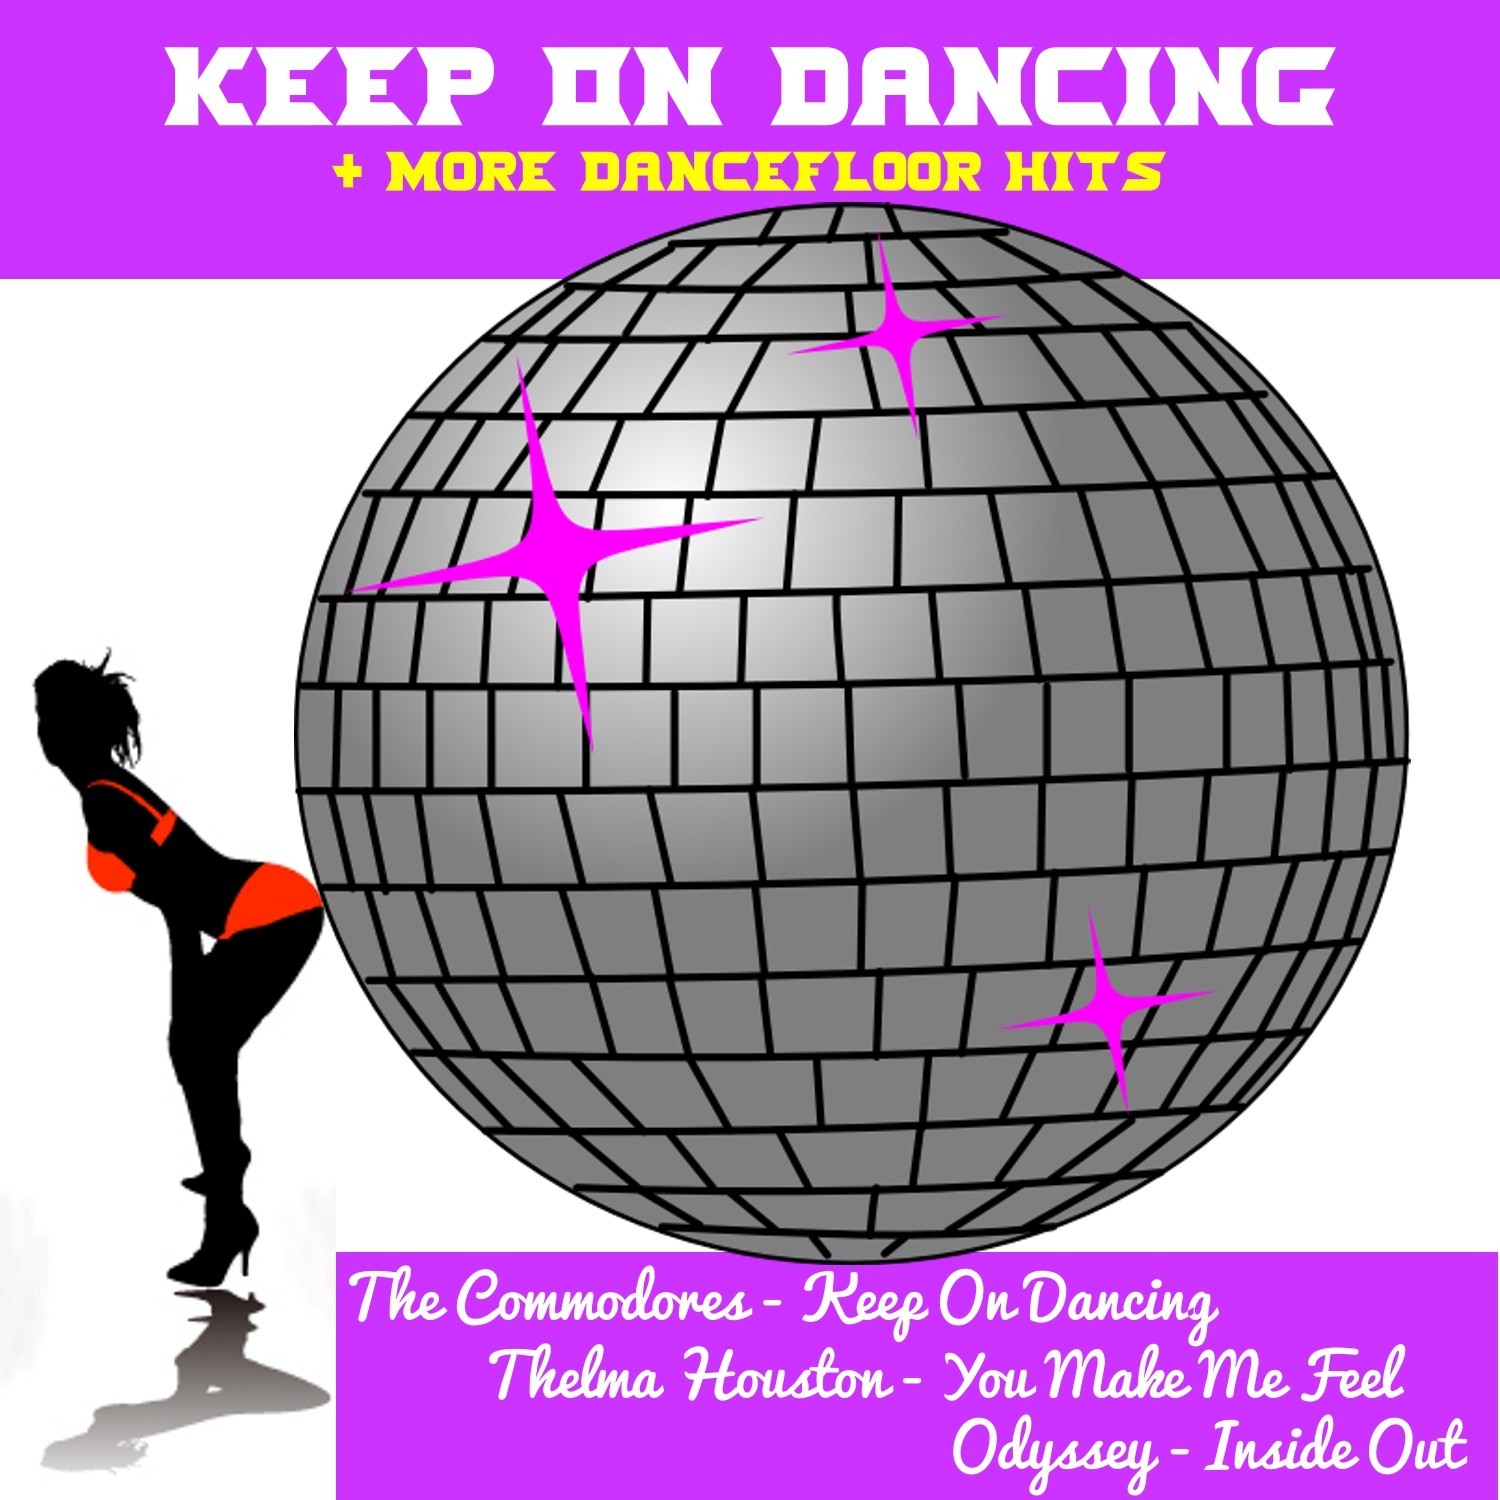 Keep on Dancing + More Dancefloor Hits